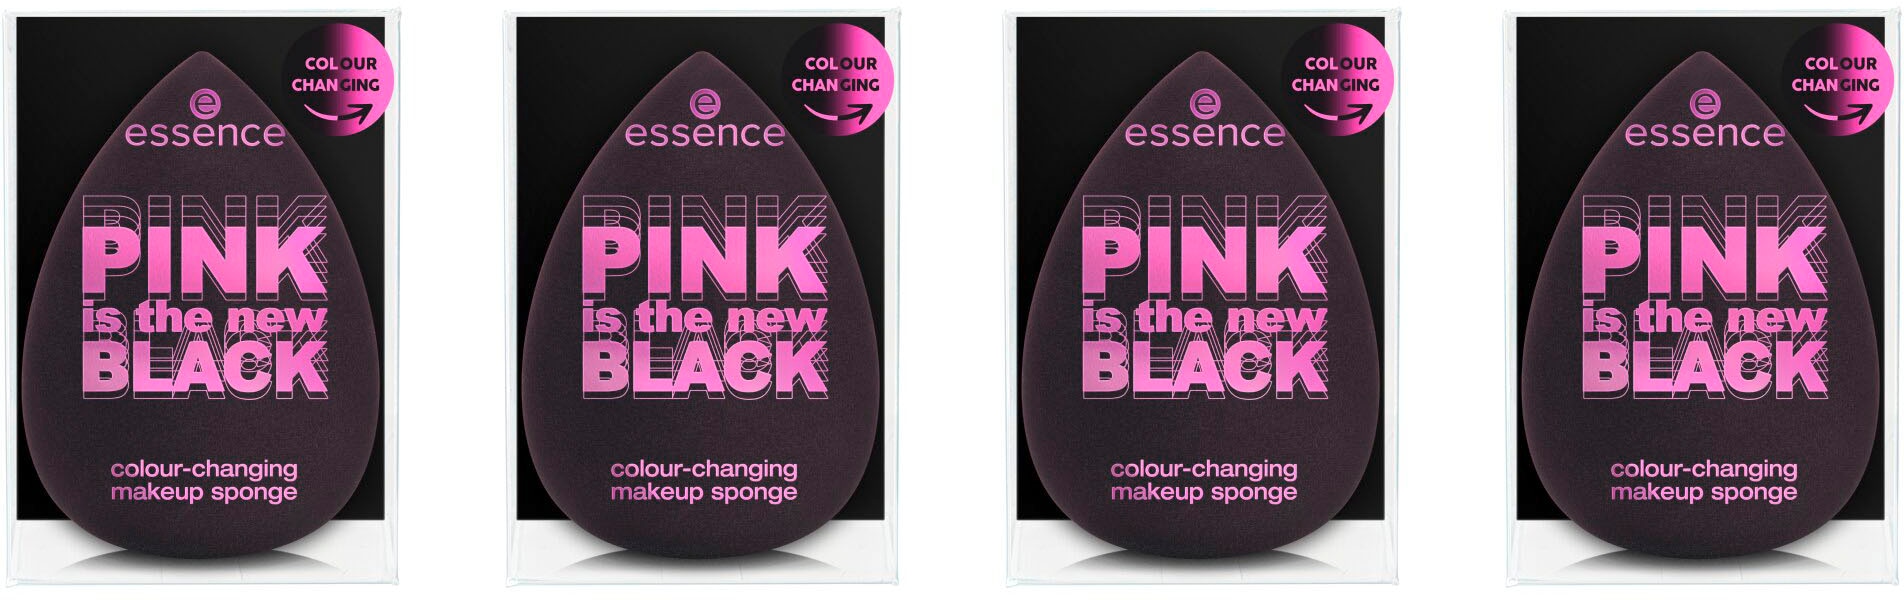 Essence Make-up Schwamm »PINK is | colour-changing new makeup the online bestellen BLACK sponge«, UNIVERSAL Colour-changing